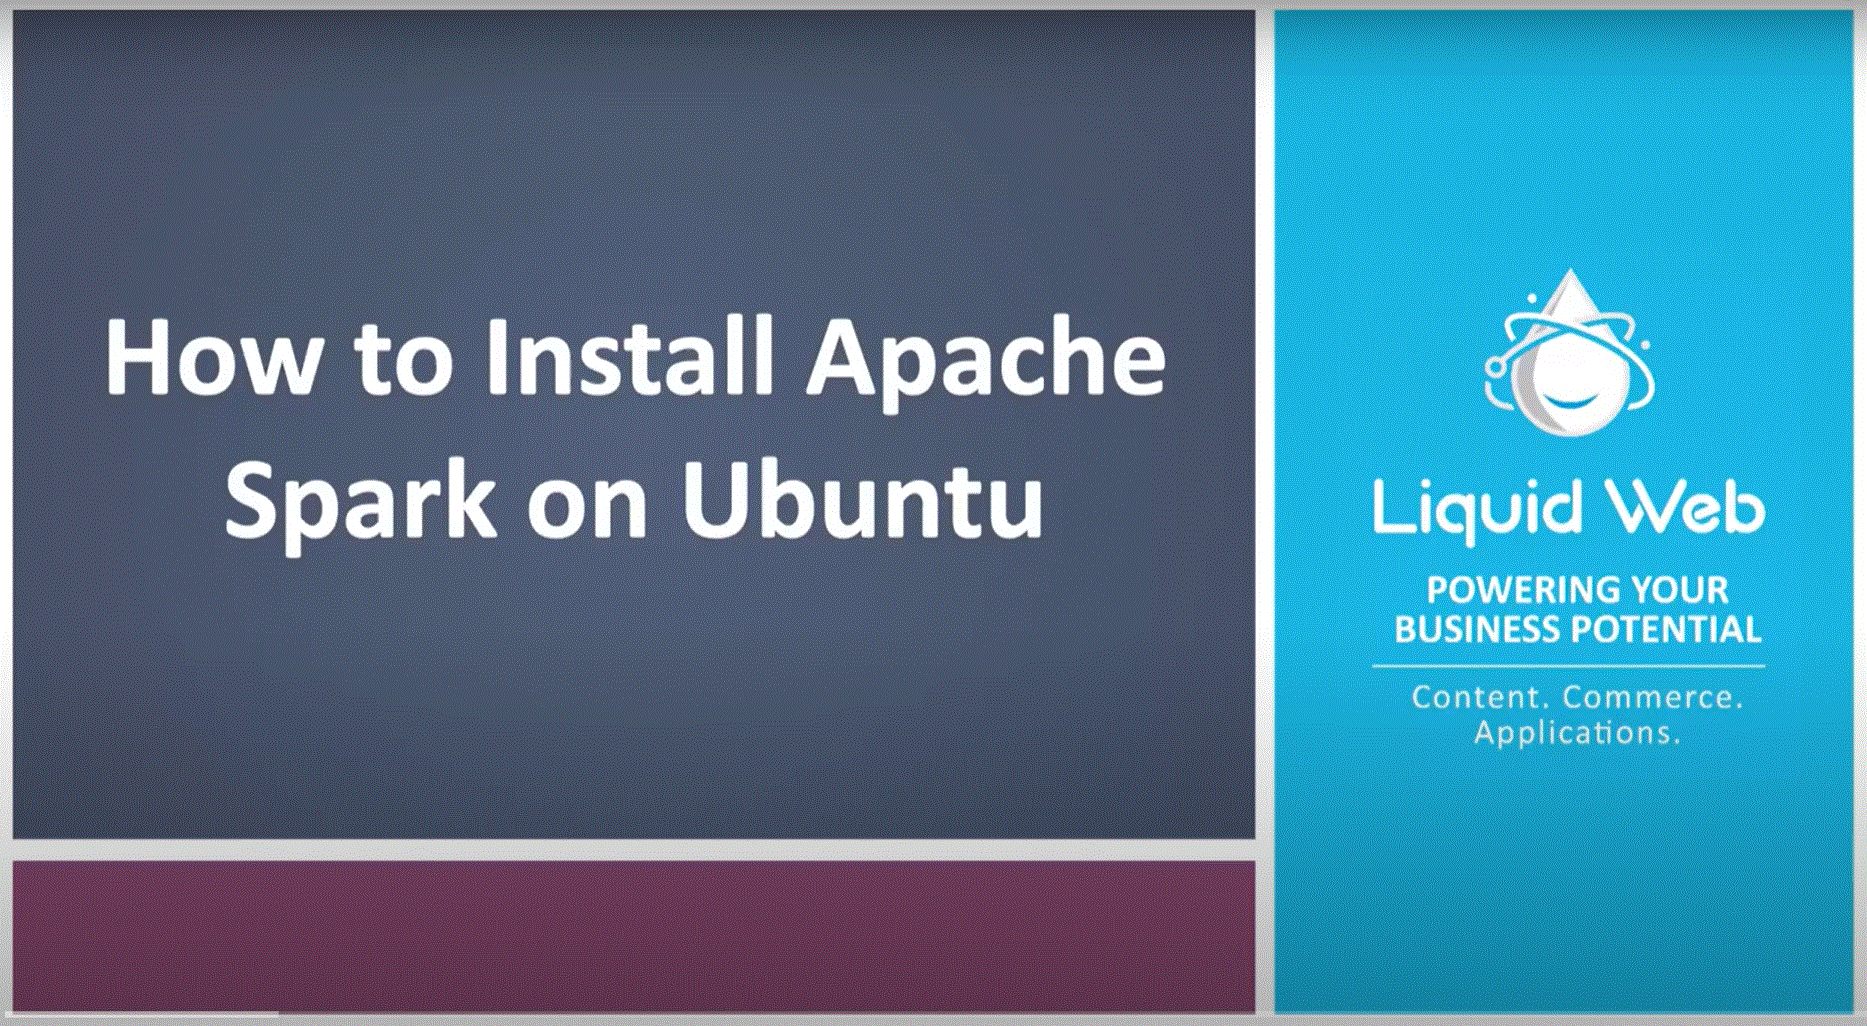 How To Install Apache Spark on Ubuntu